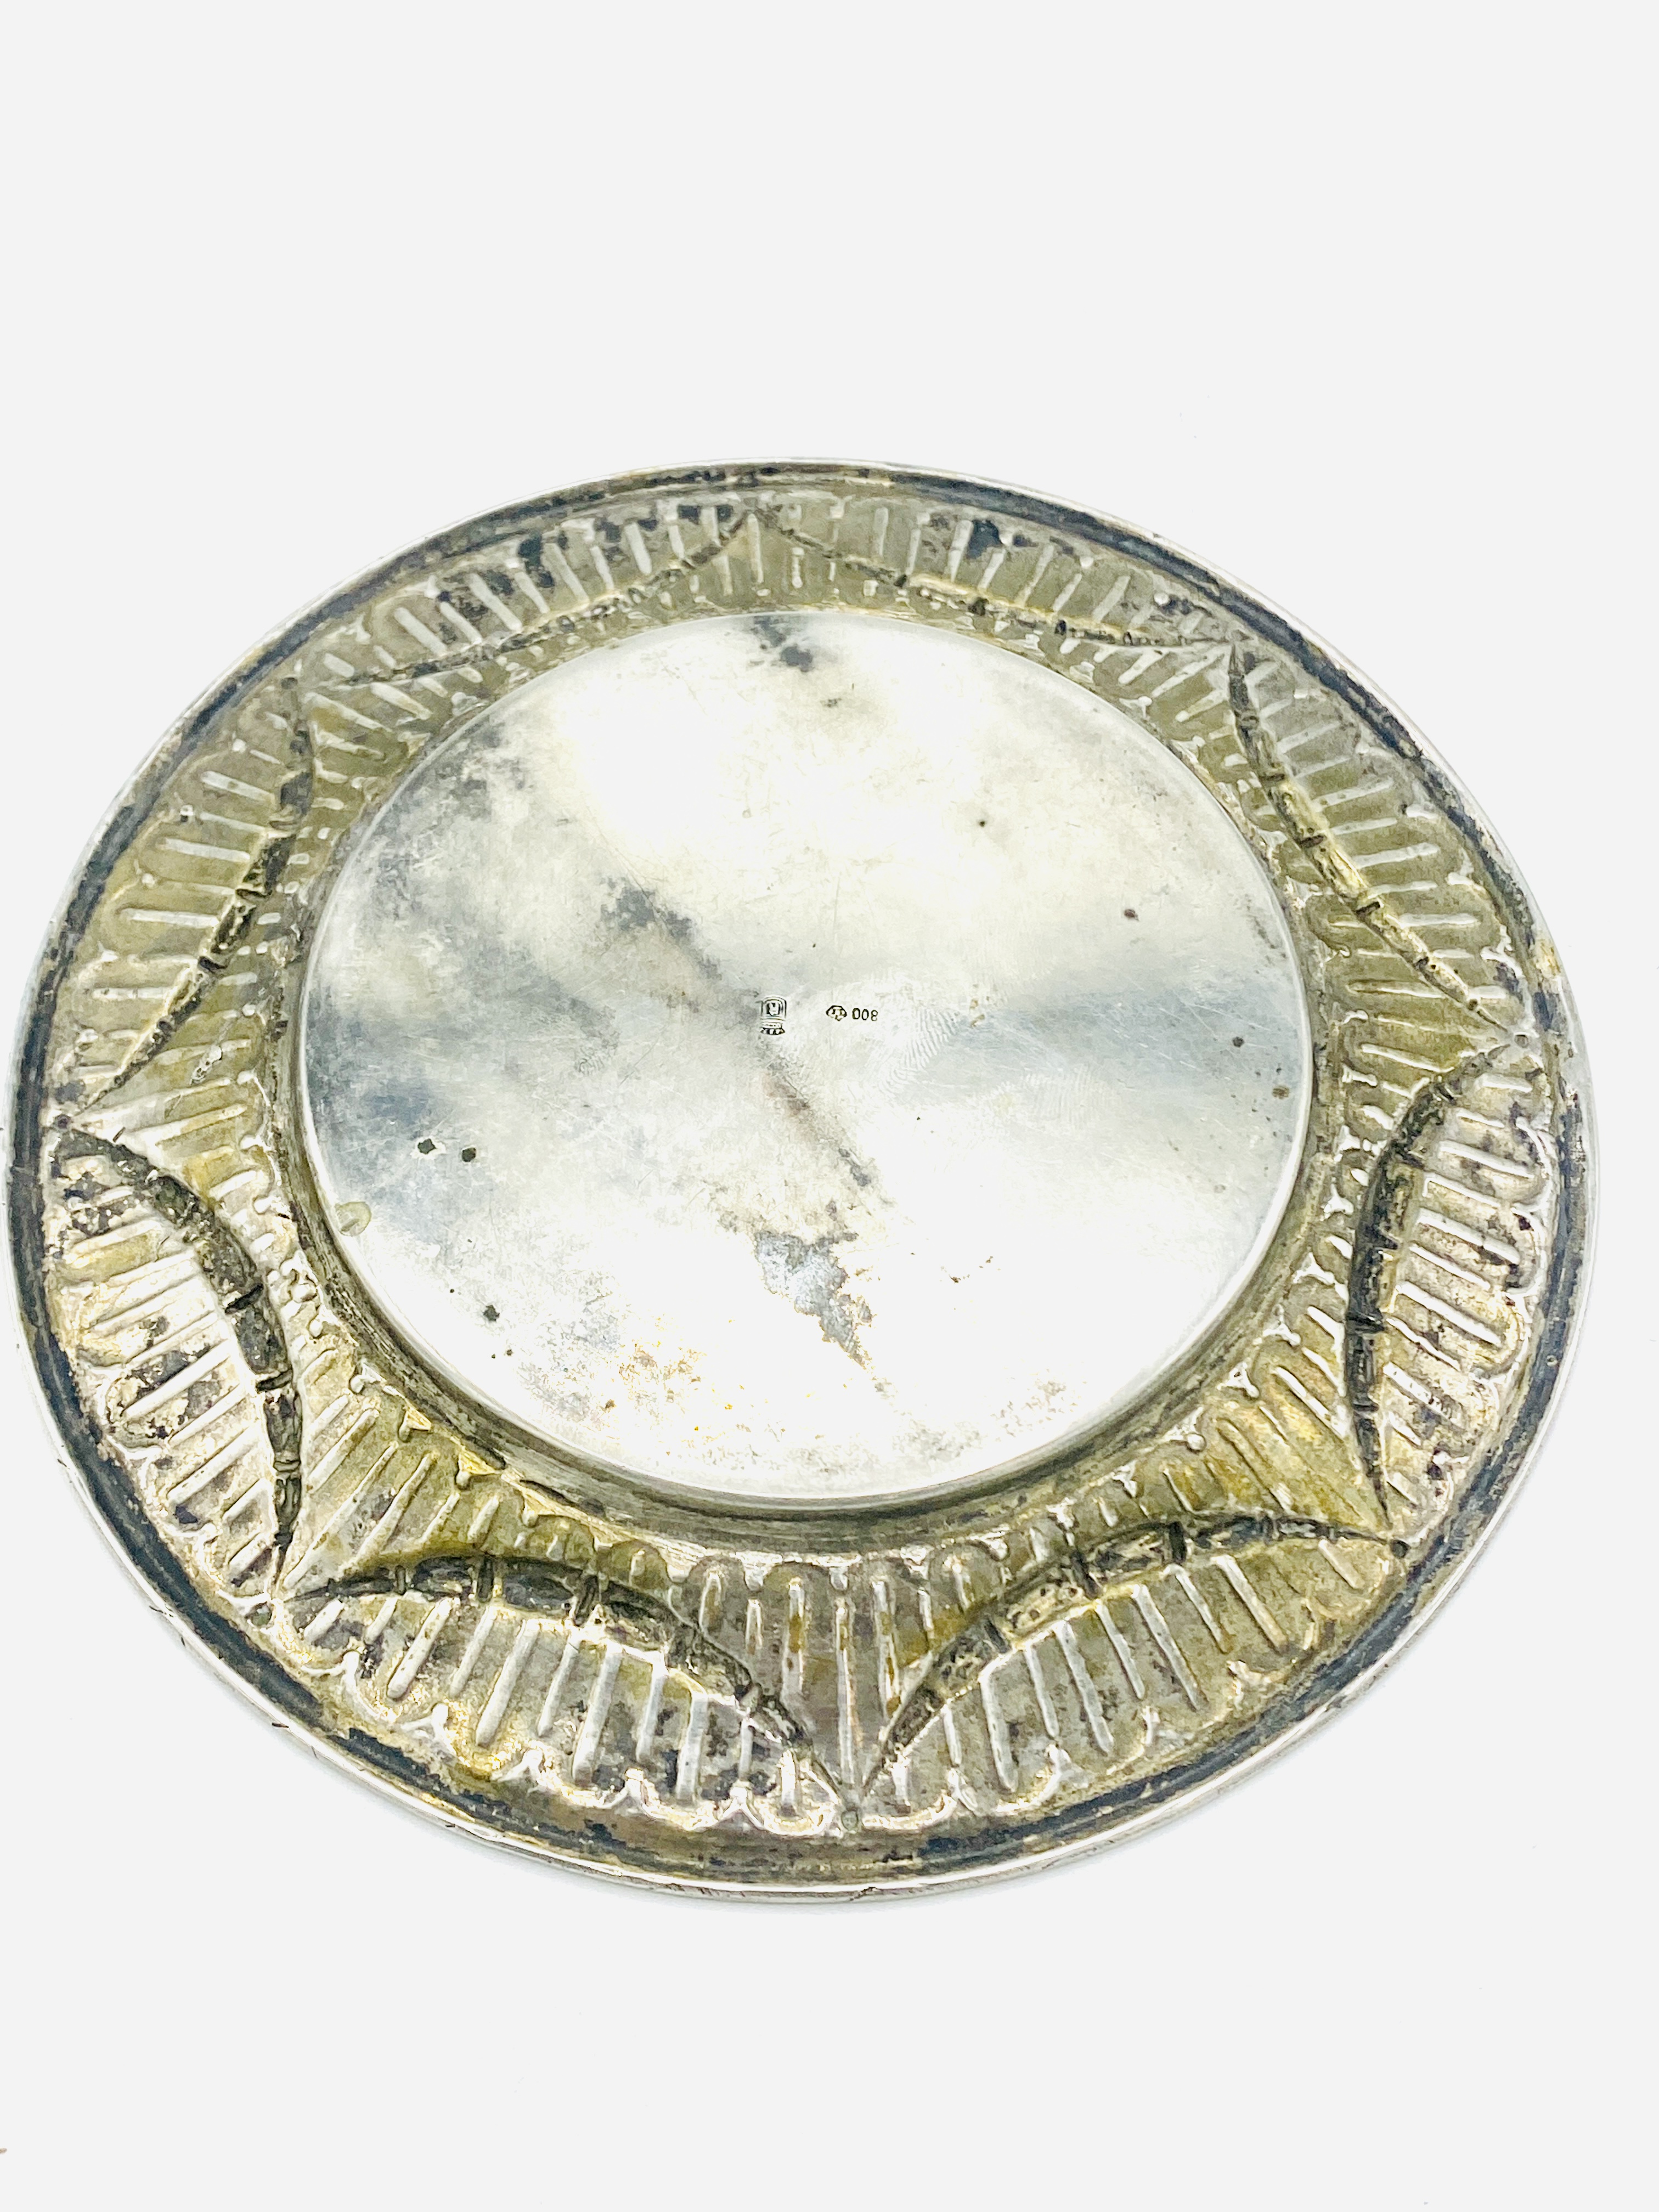 German Hanau silver tray - Image 3 of 3